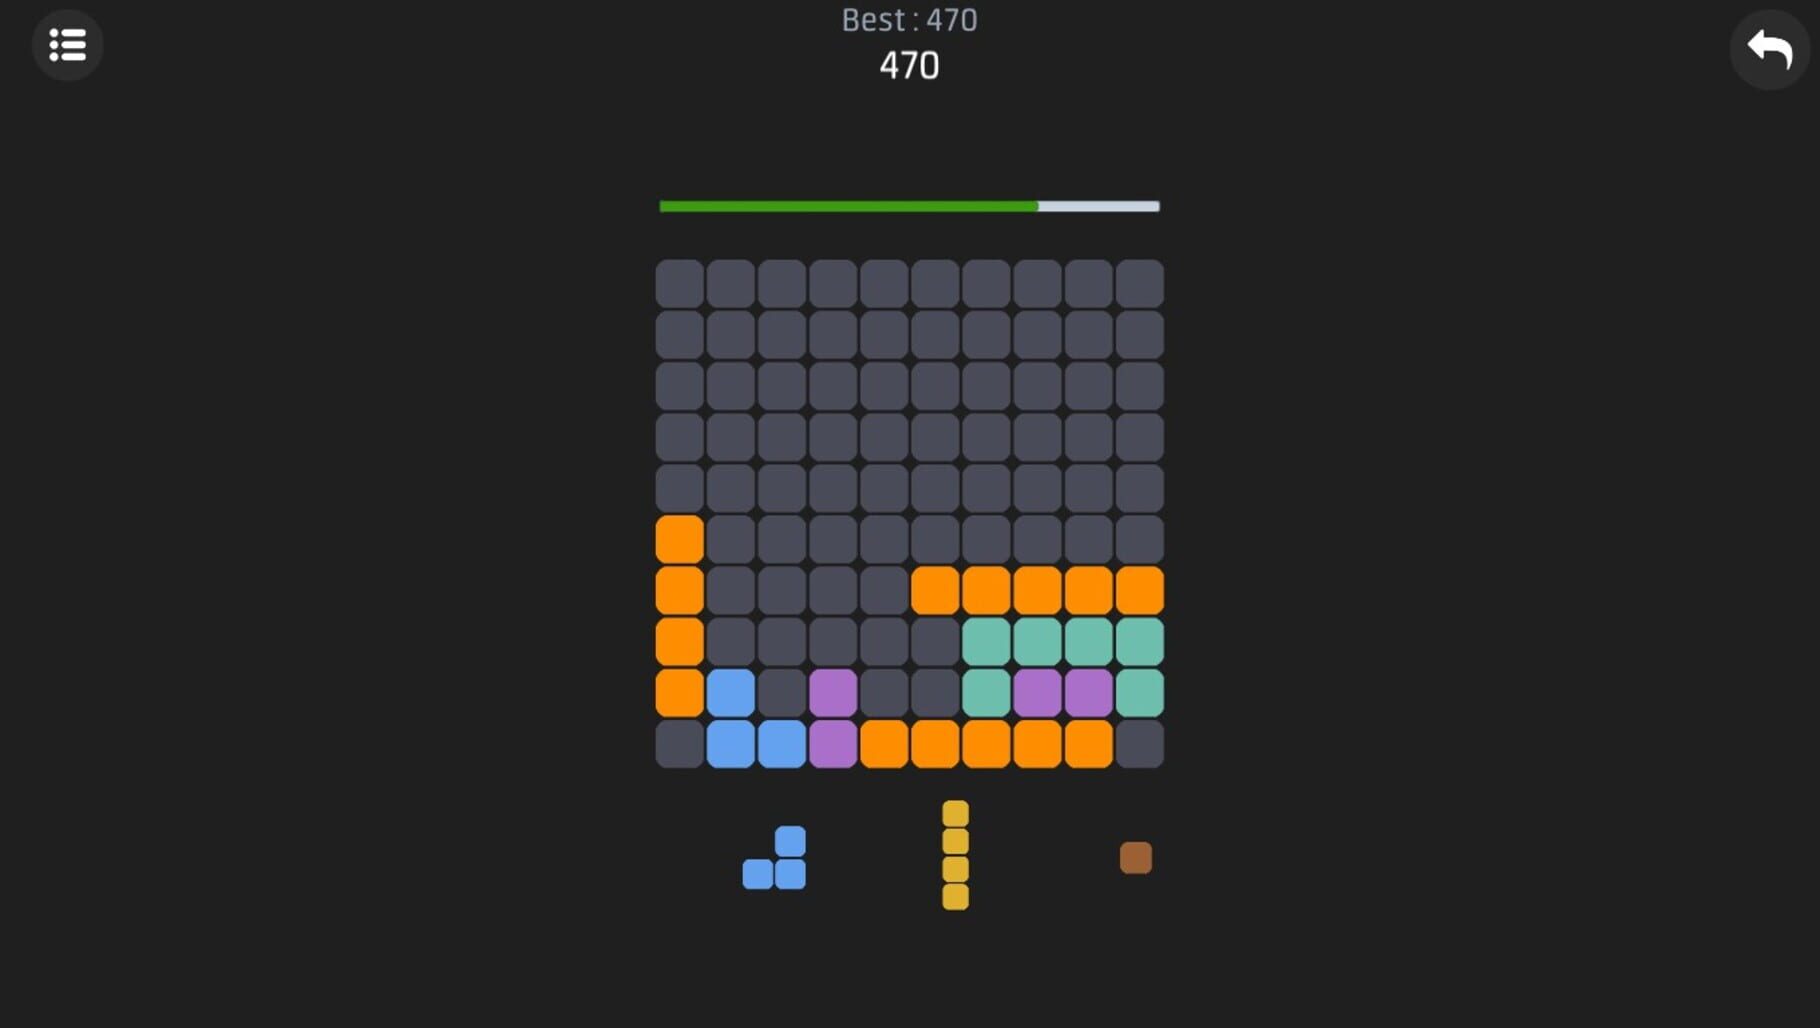 Block Puzzle screenshot